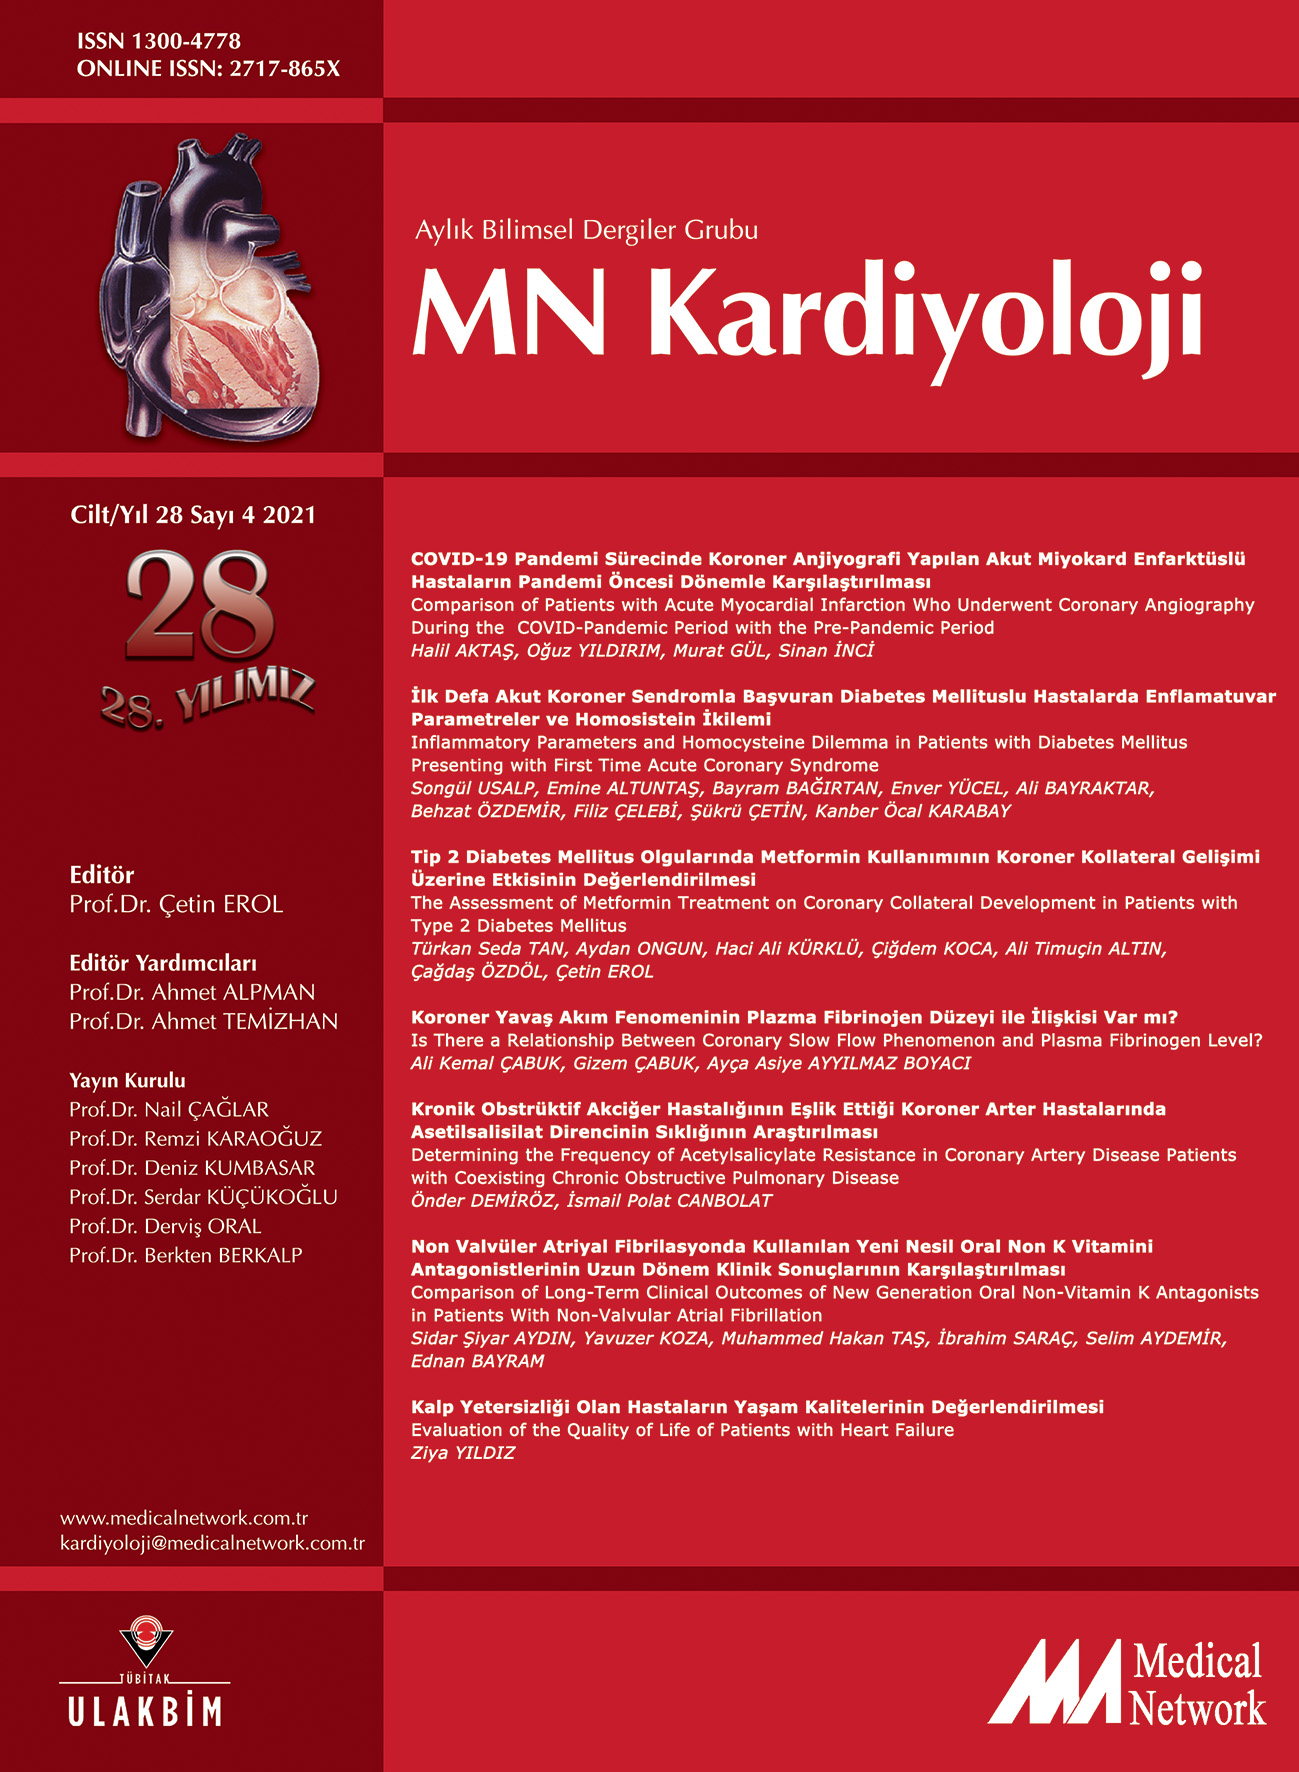 <p>MN Kardiyoloji Cilt: 28 Say: 4 2021 MN Cardiology Volume: 28 No: 4 2021</p>